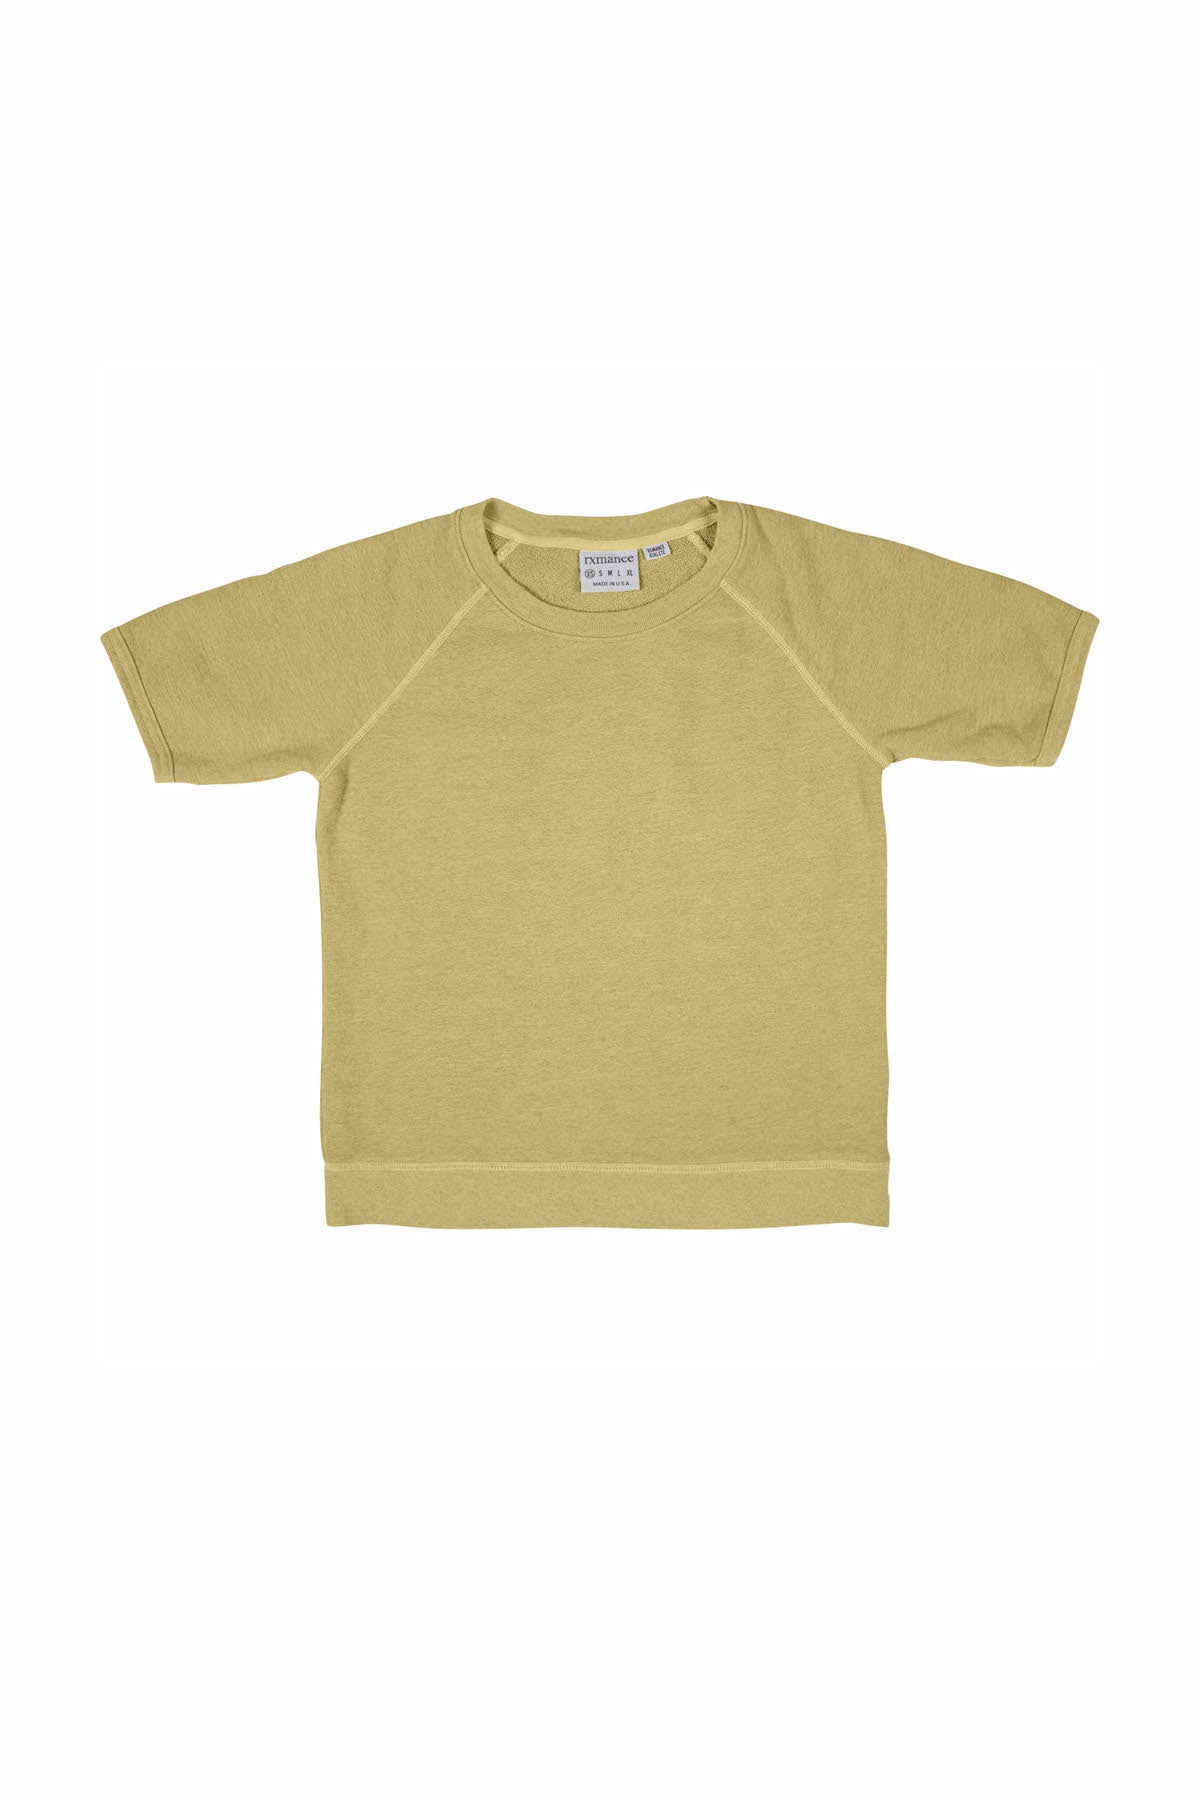 Rxmance Unisex Yellow Short Sleeve Sweatshirt